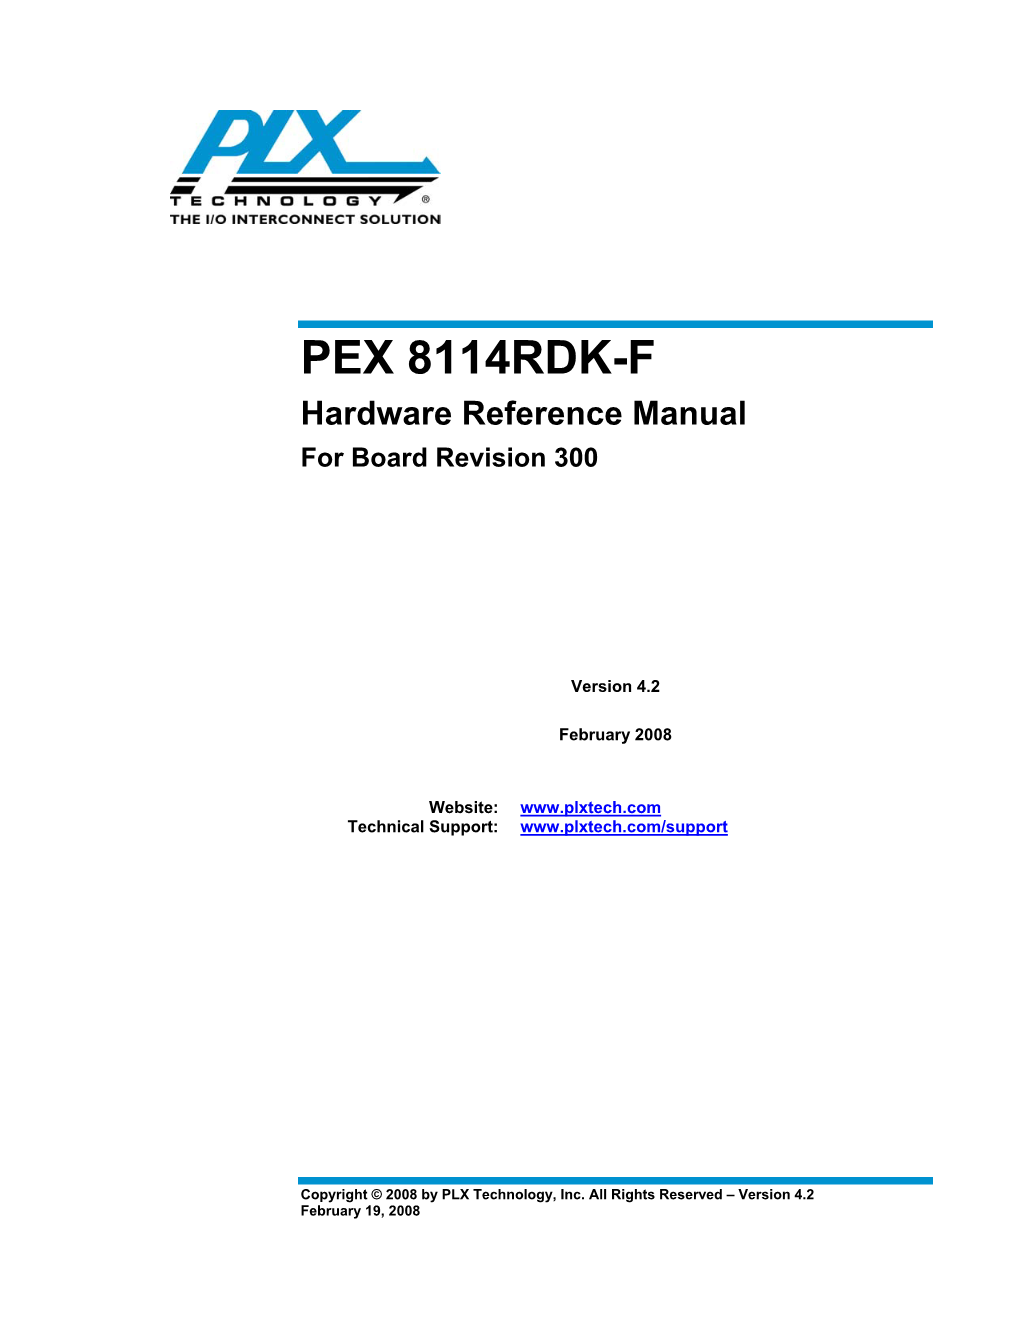 PEX 8114RDK-F Hardware Reference Manual for Board Rev 300